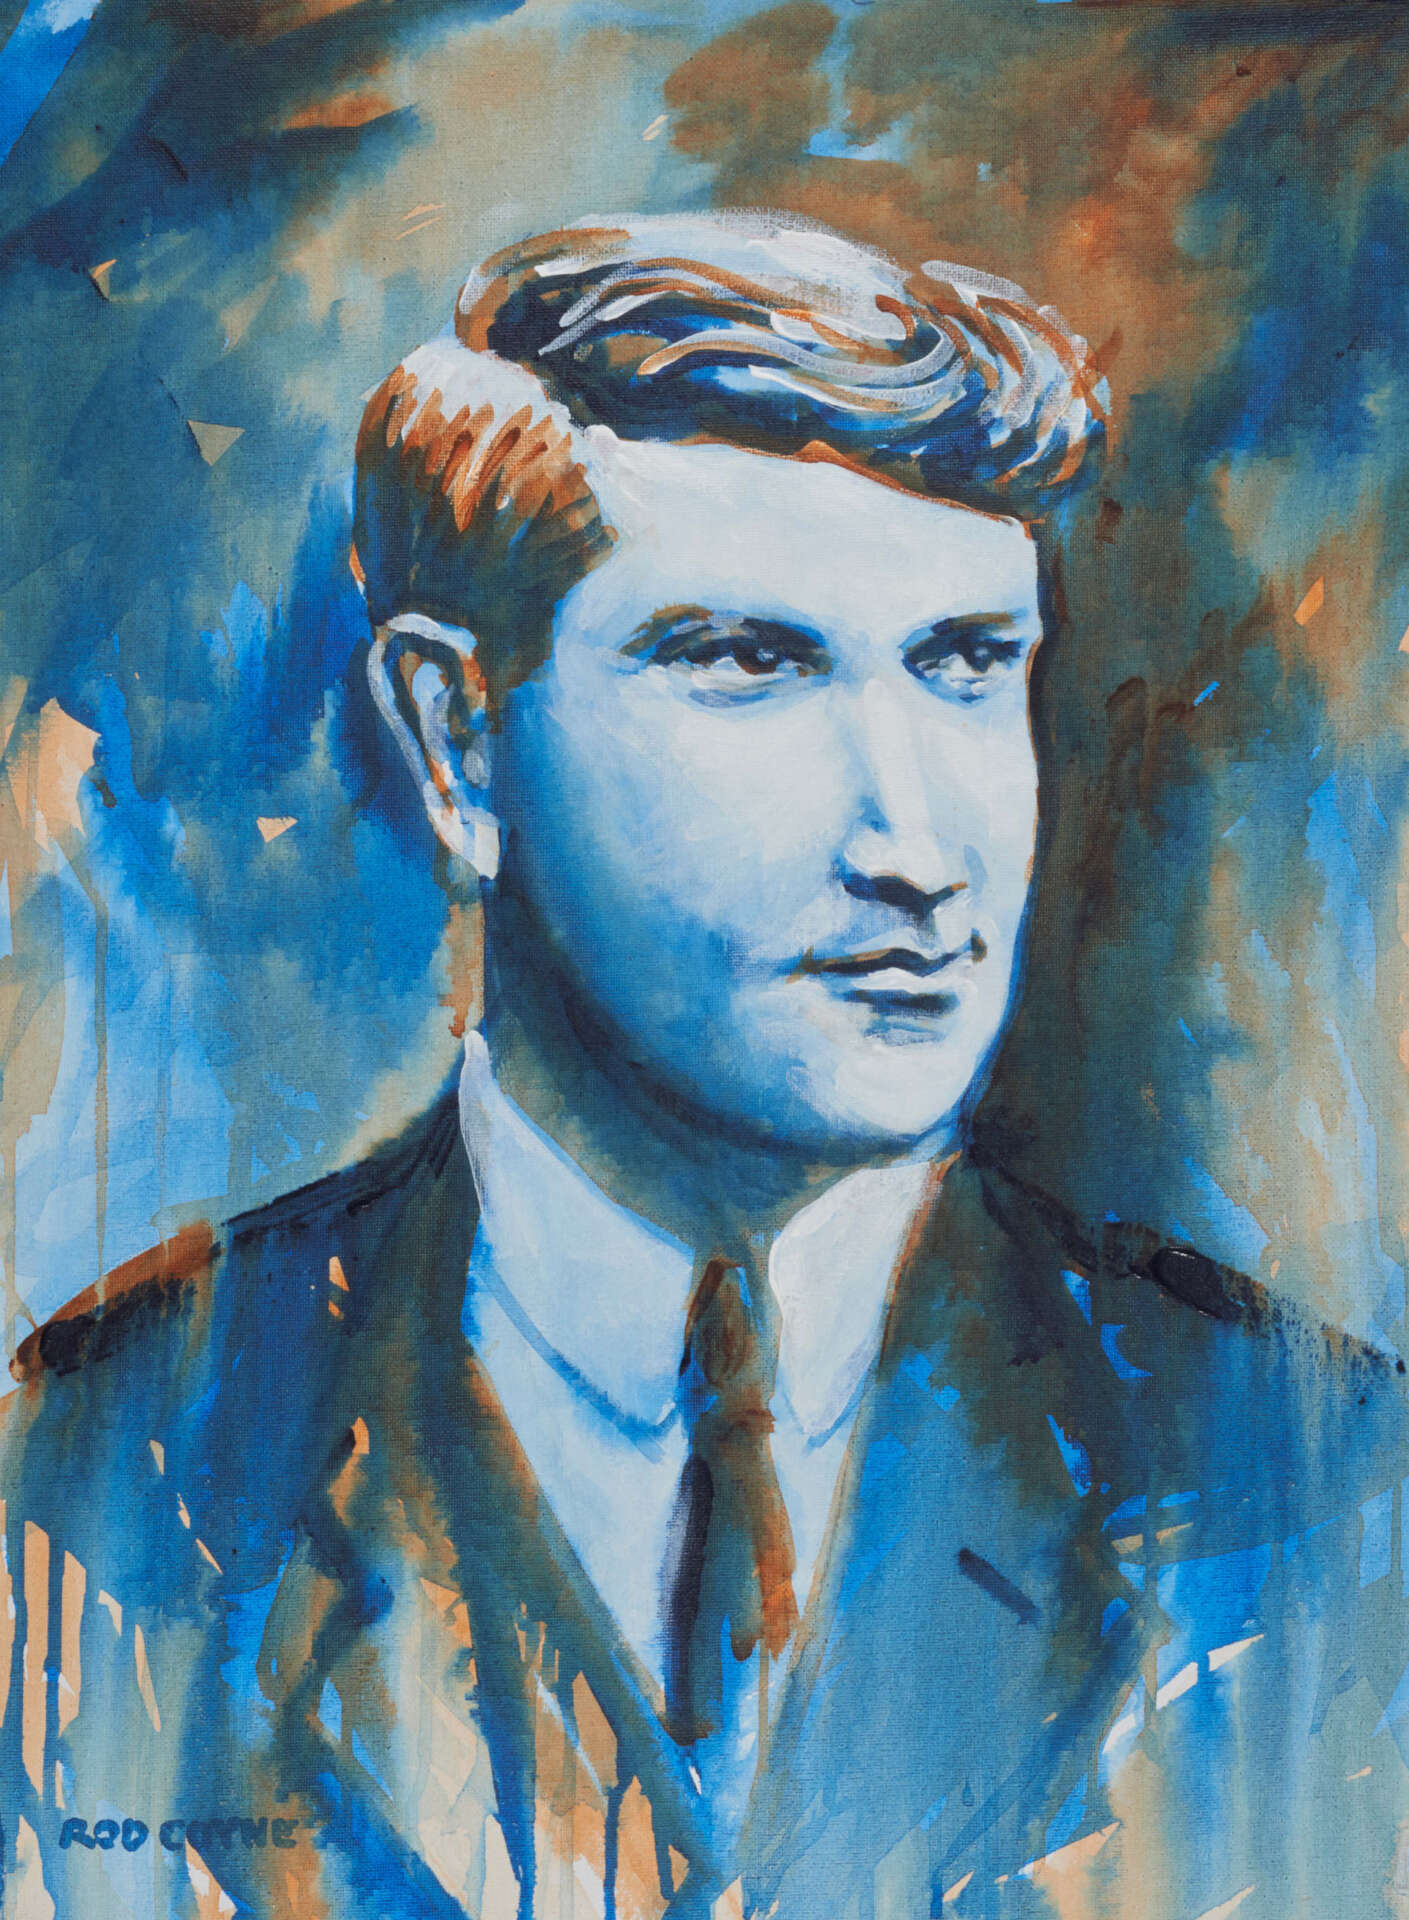 artist rod coyne's portrait "Michael Collins 1916" is shown here.